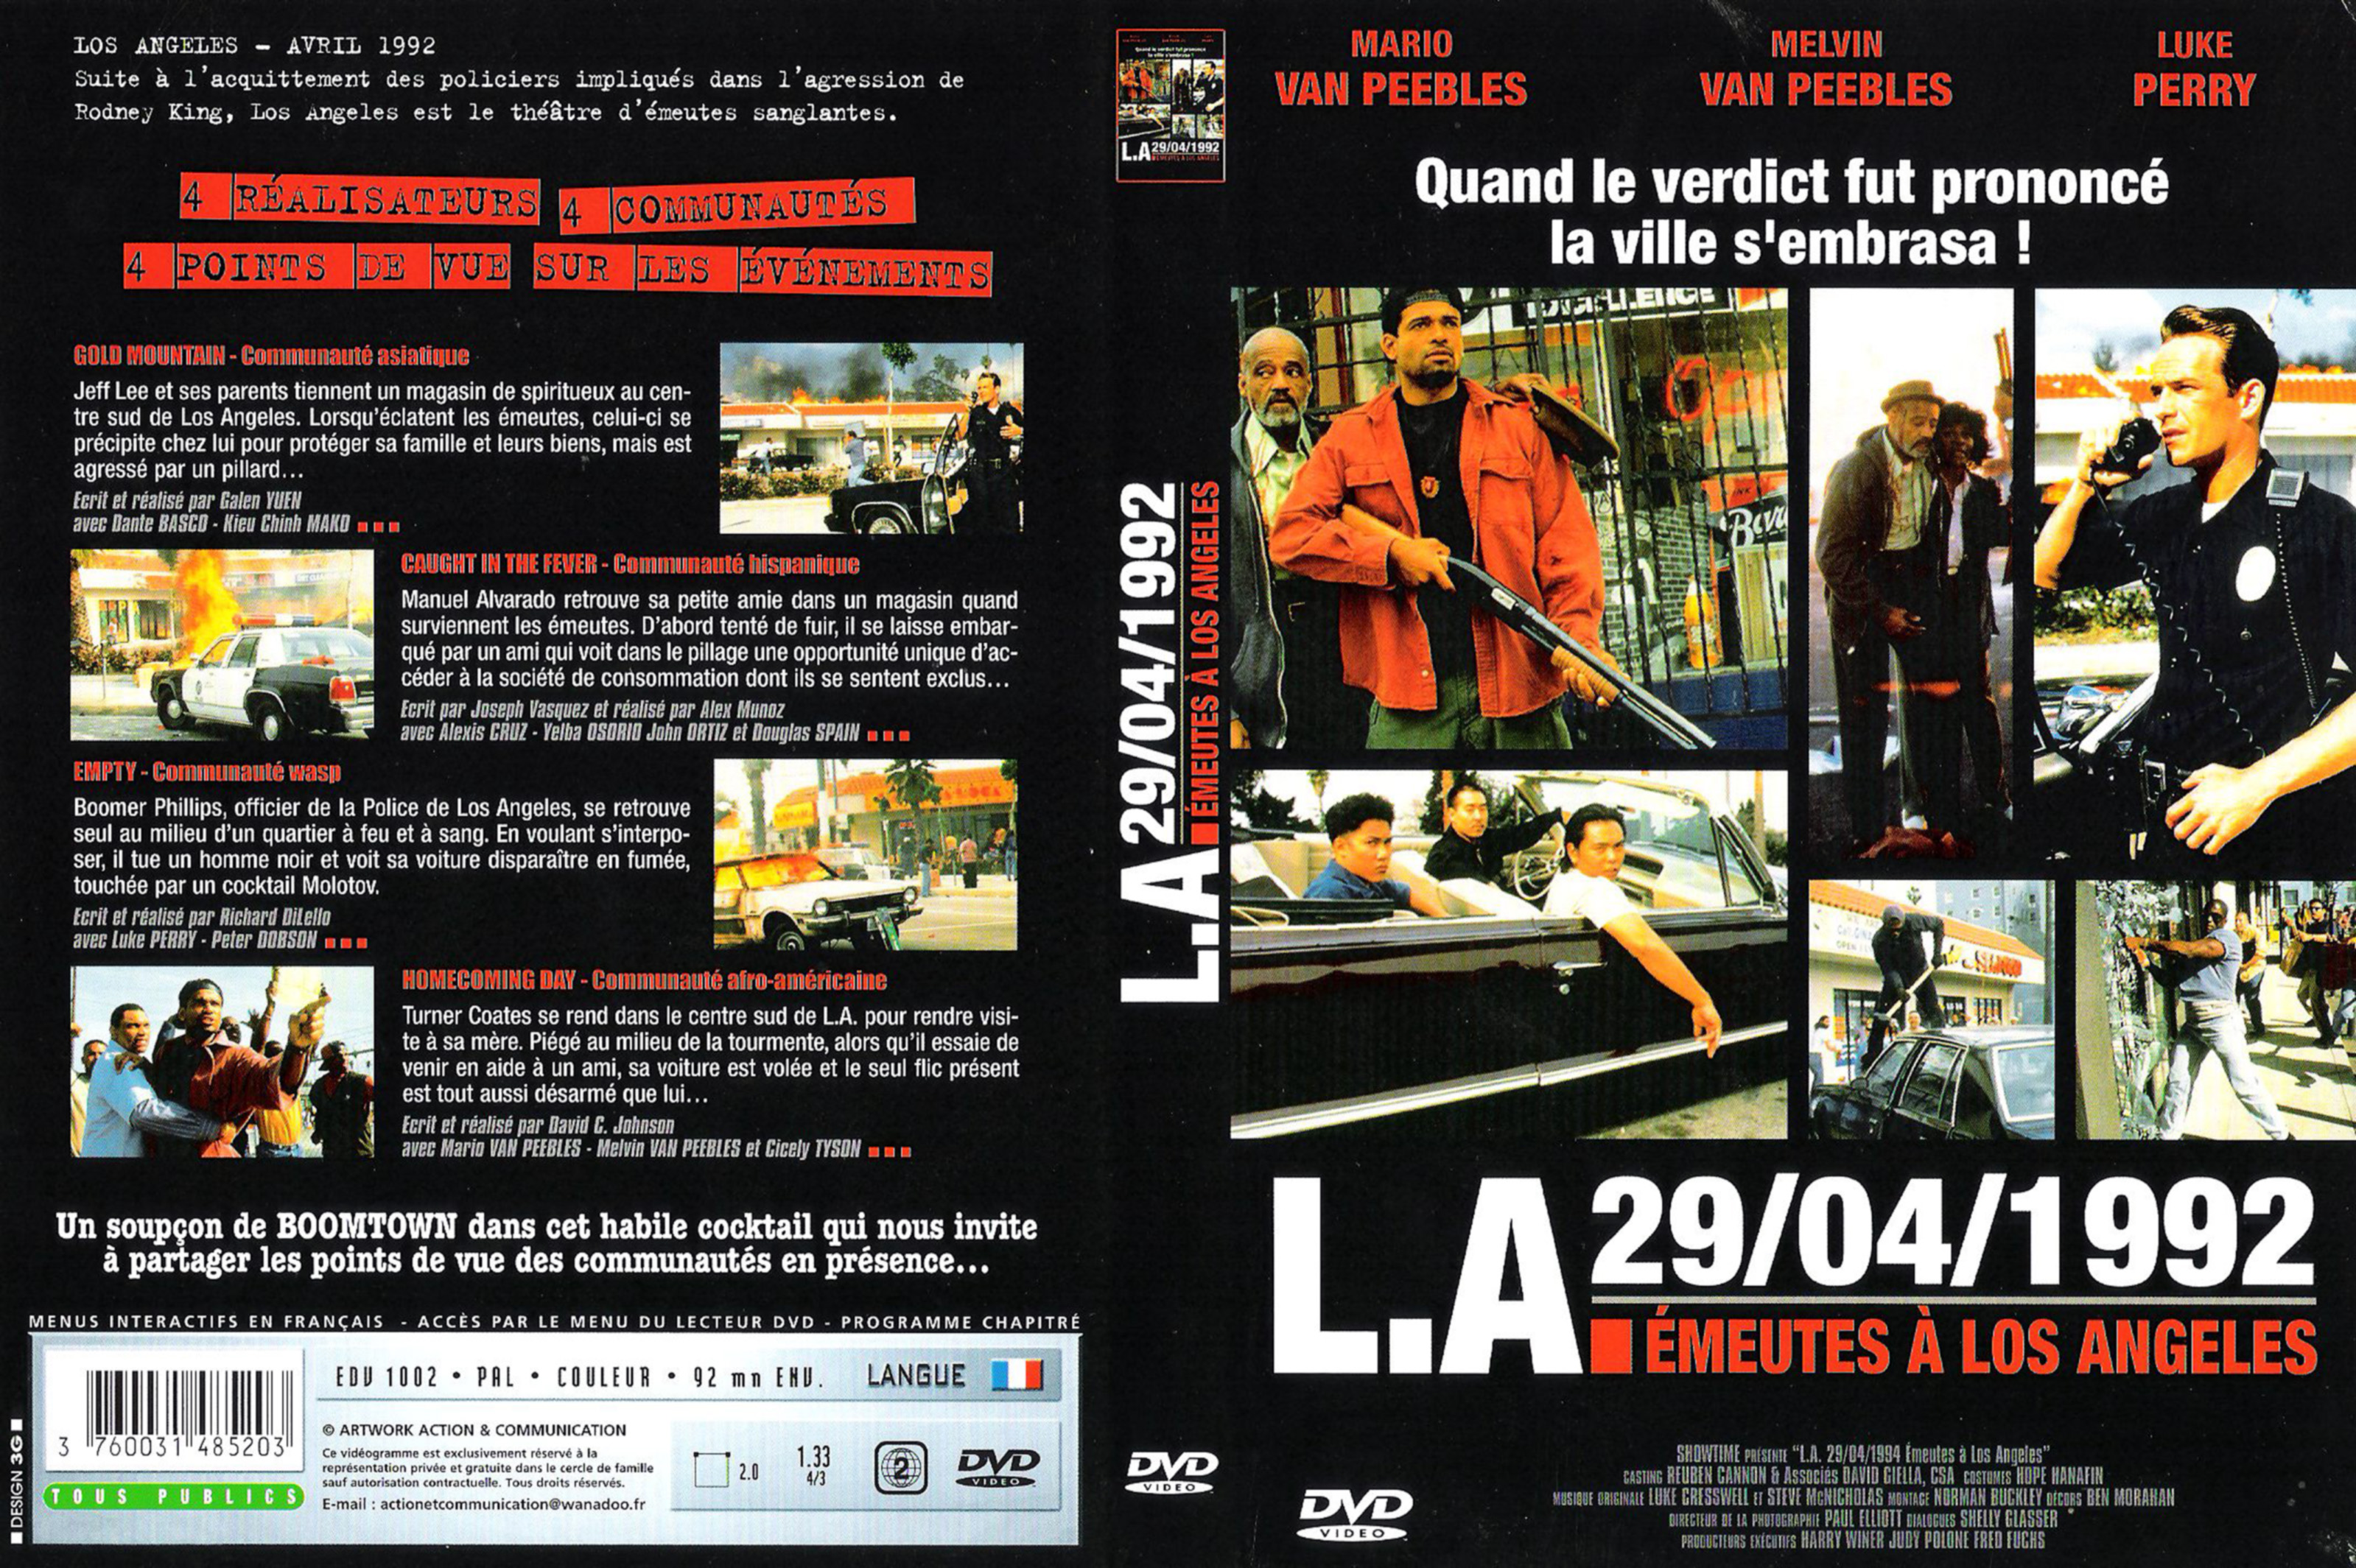 Jaquette DVD LA 29-04-1992 Emeutes  Los Angeles v2